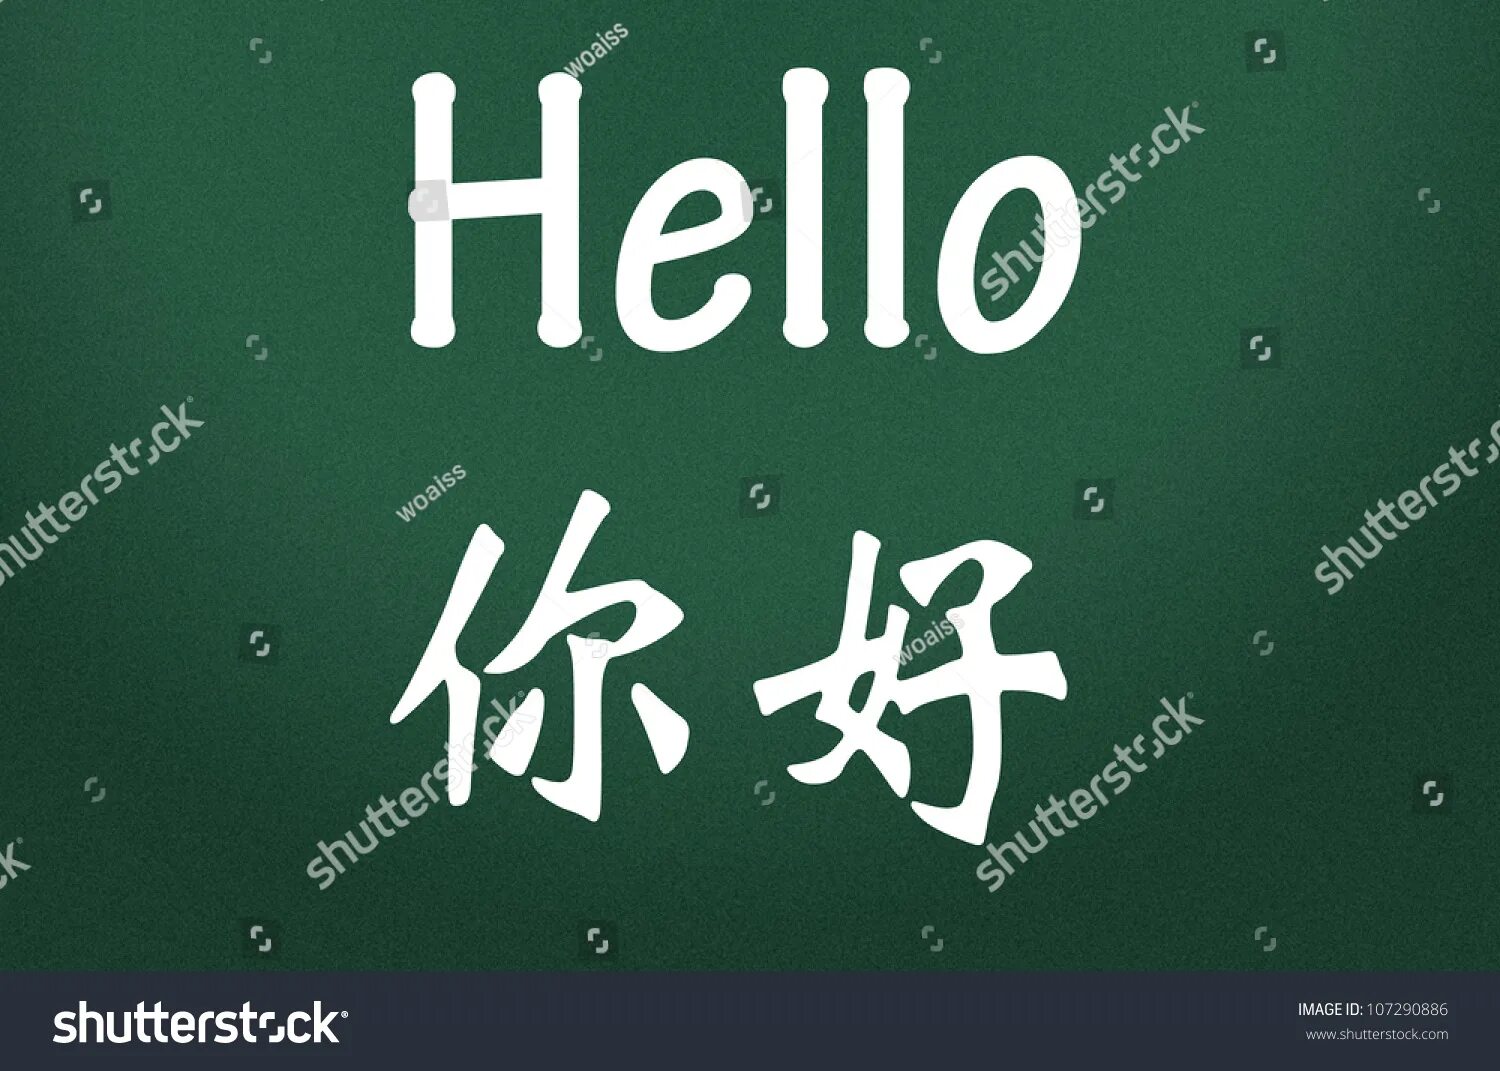 Здравствуйте на китайском языке. Привет на китайском. По китайскому языку Приветствие. Hello на китайском. Переведи на китайский hello